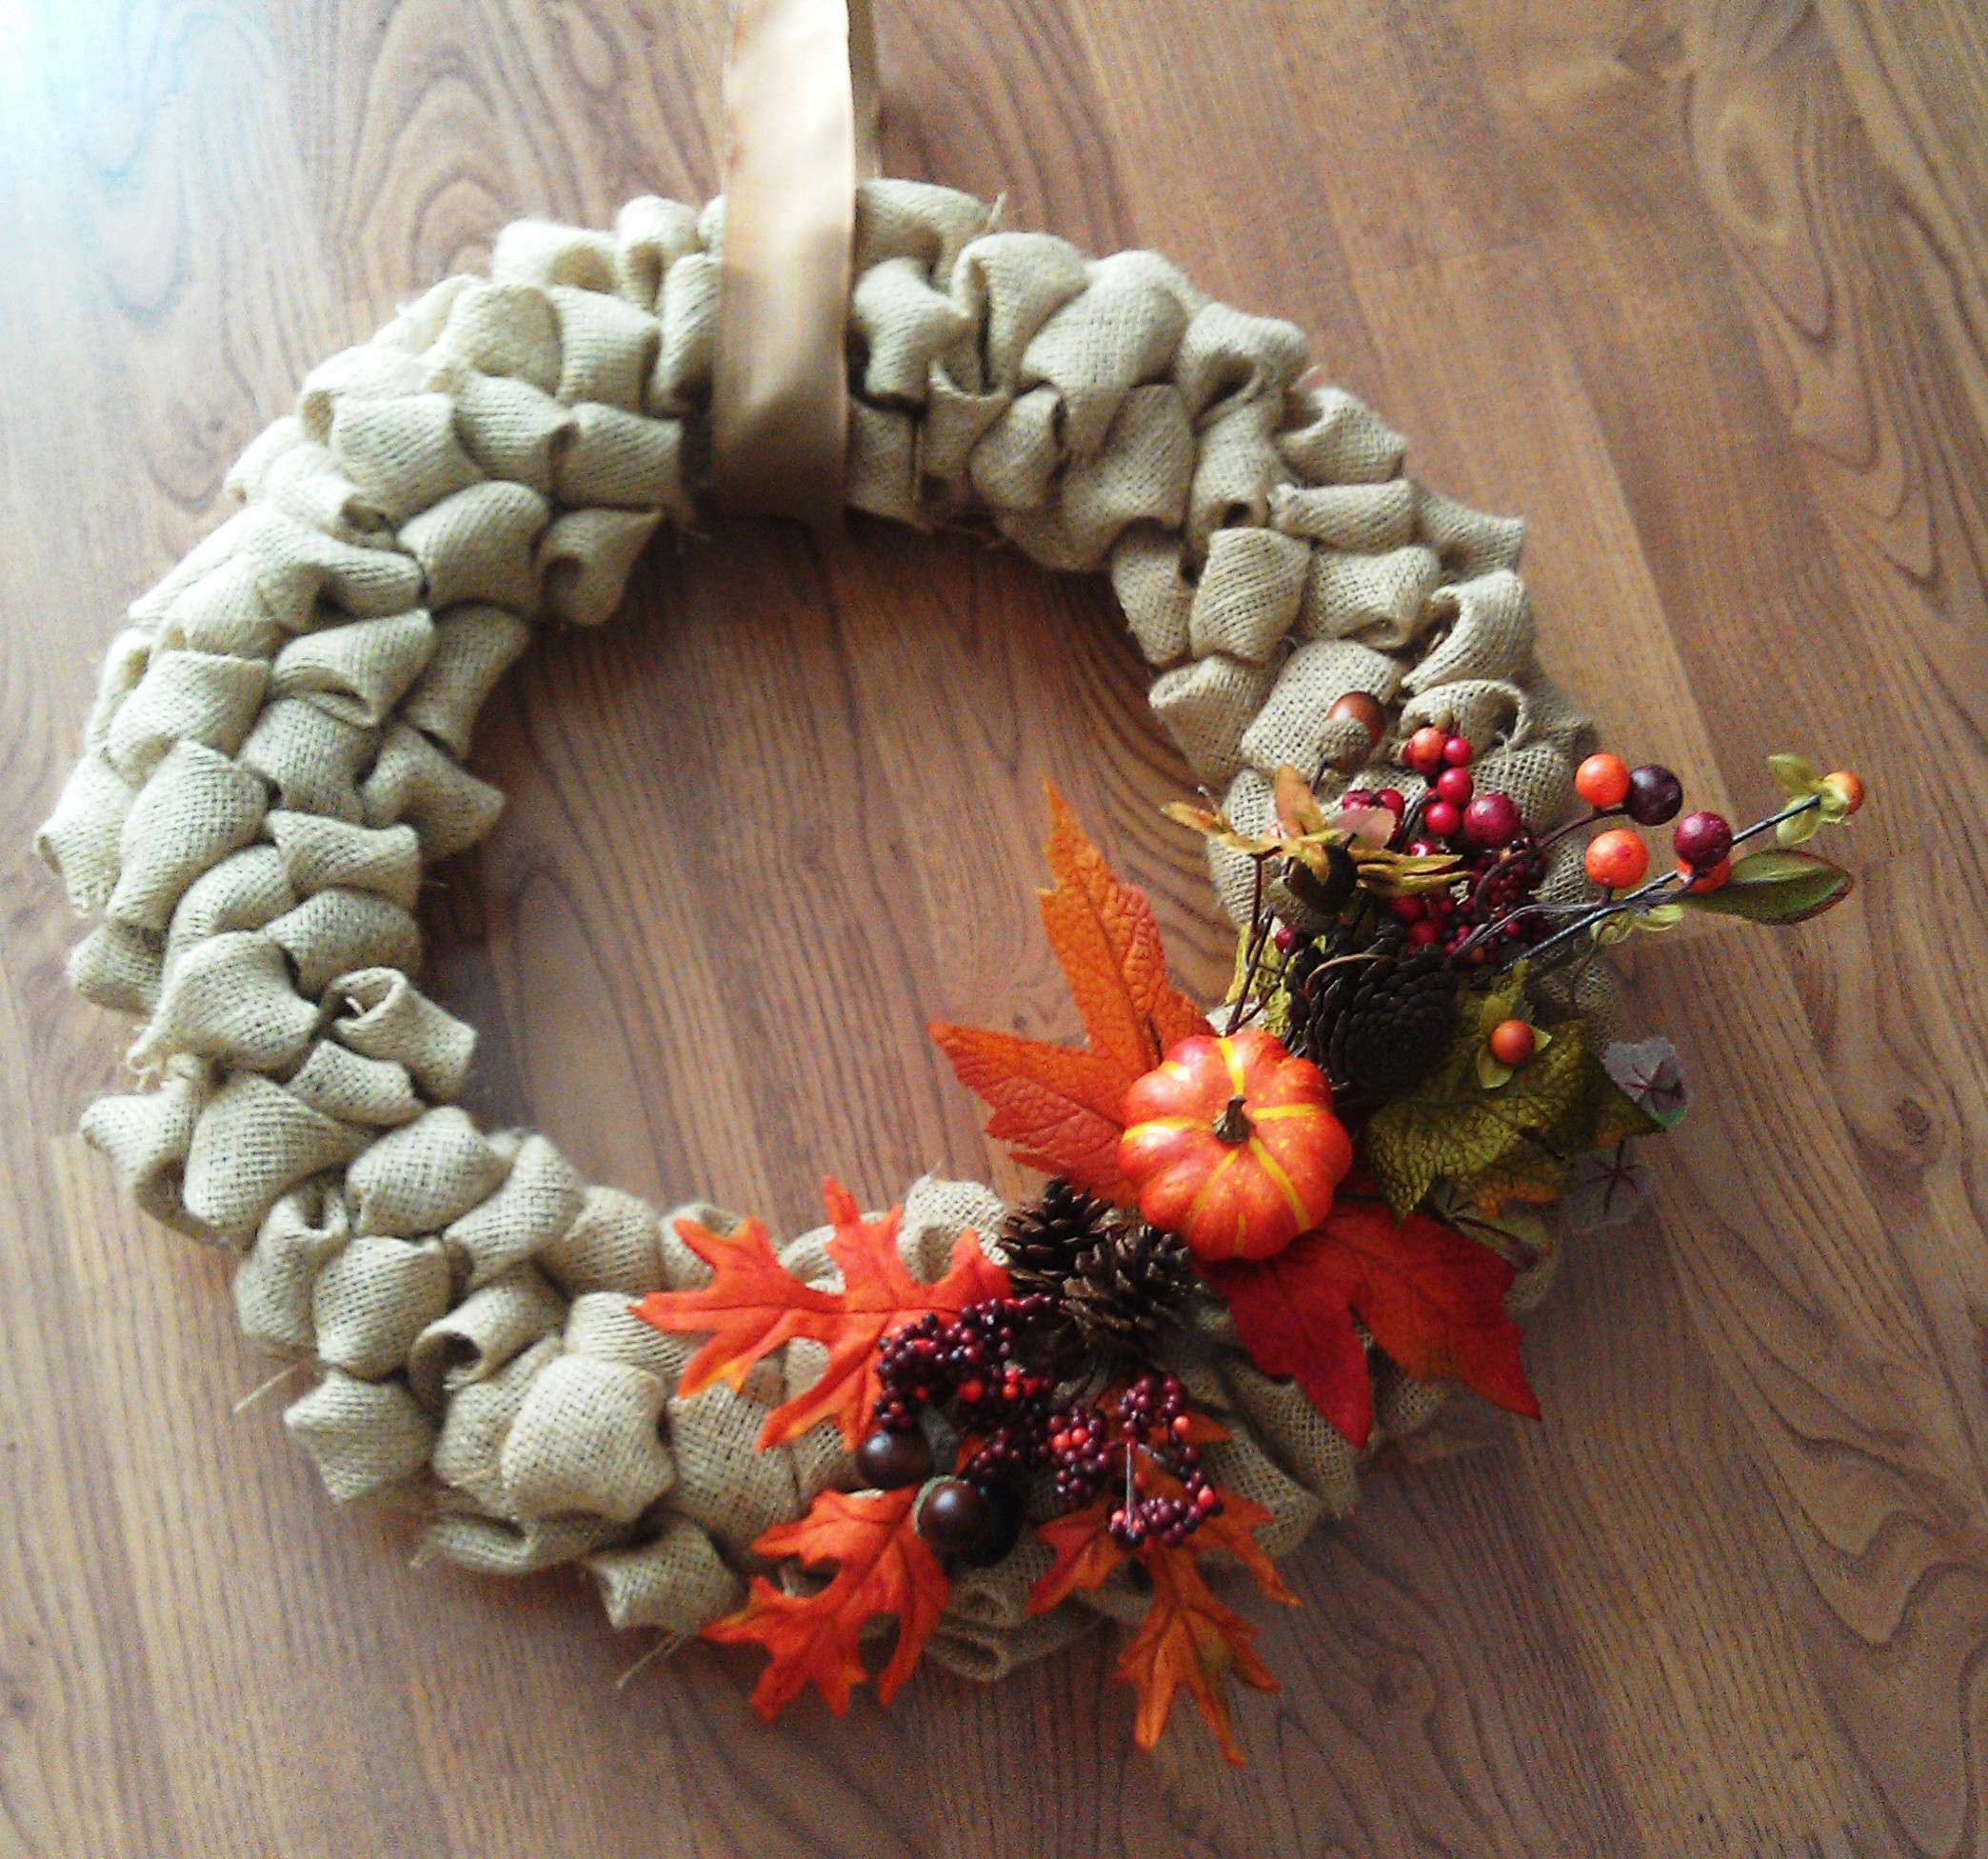 Best ideas about DIY Burlap Wreath
. Save or Pin Fall Burlap Wreath DIY Now.